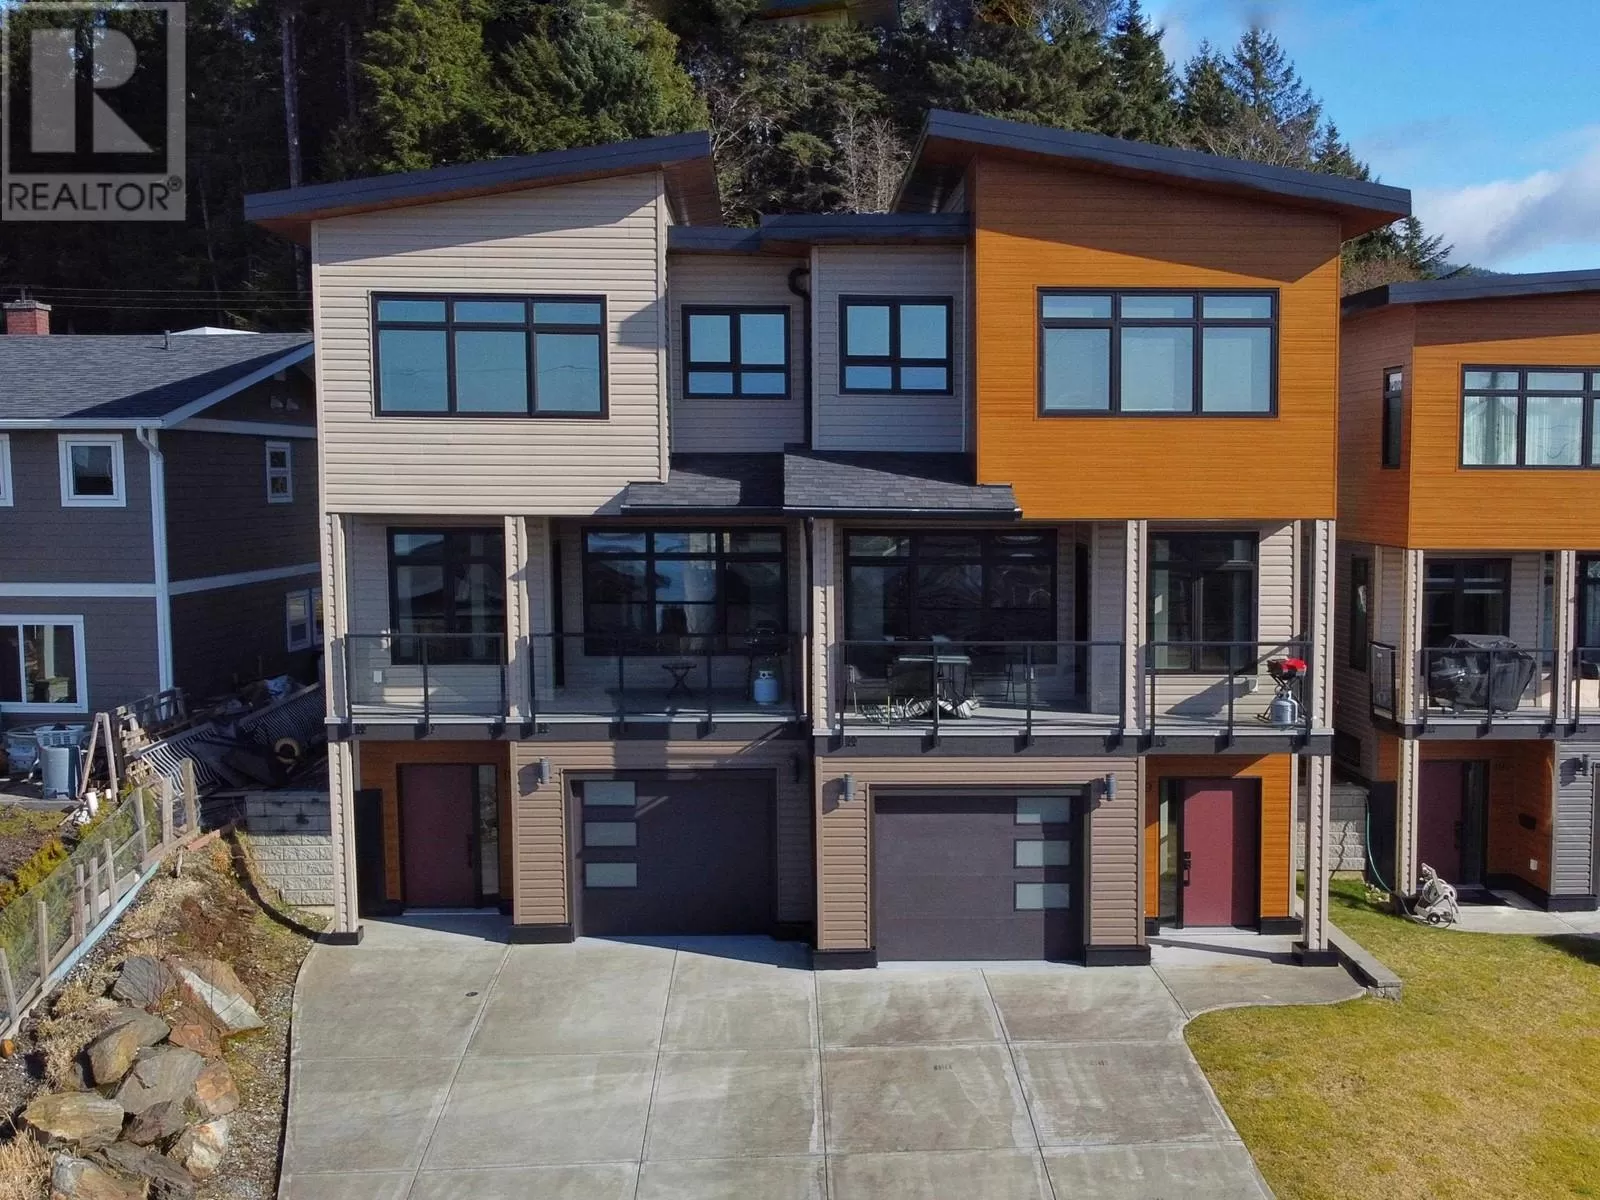 Duplex for rent: 189 Van Arsdol Street, Prince Rupert, British Columbia V8J 1E3